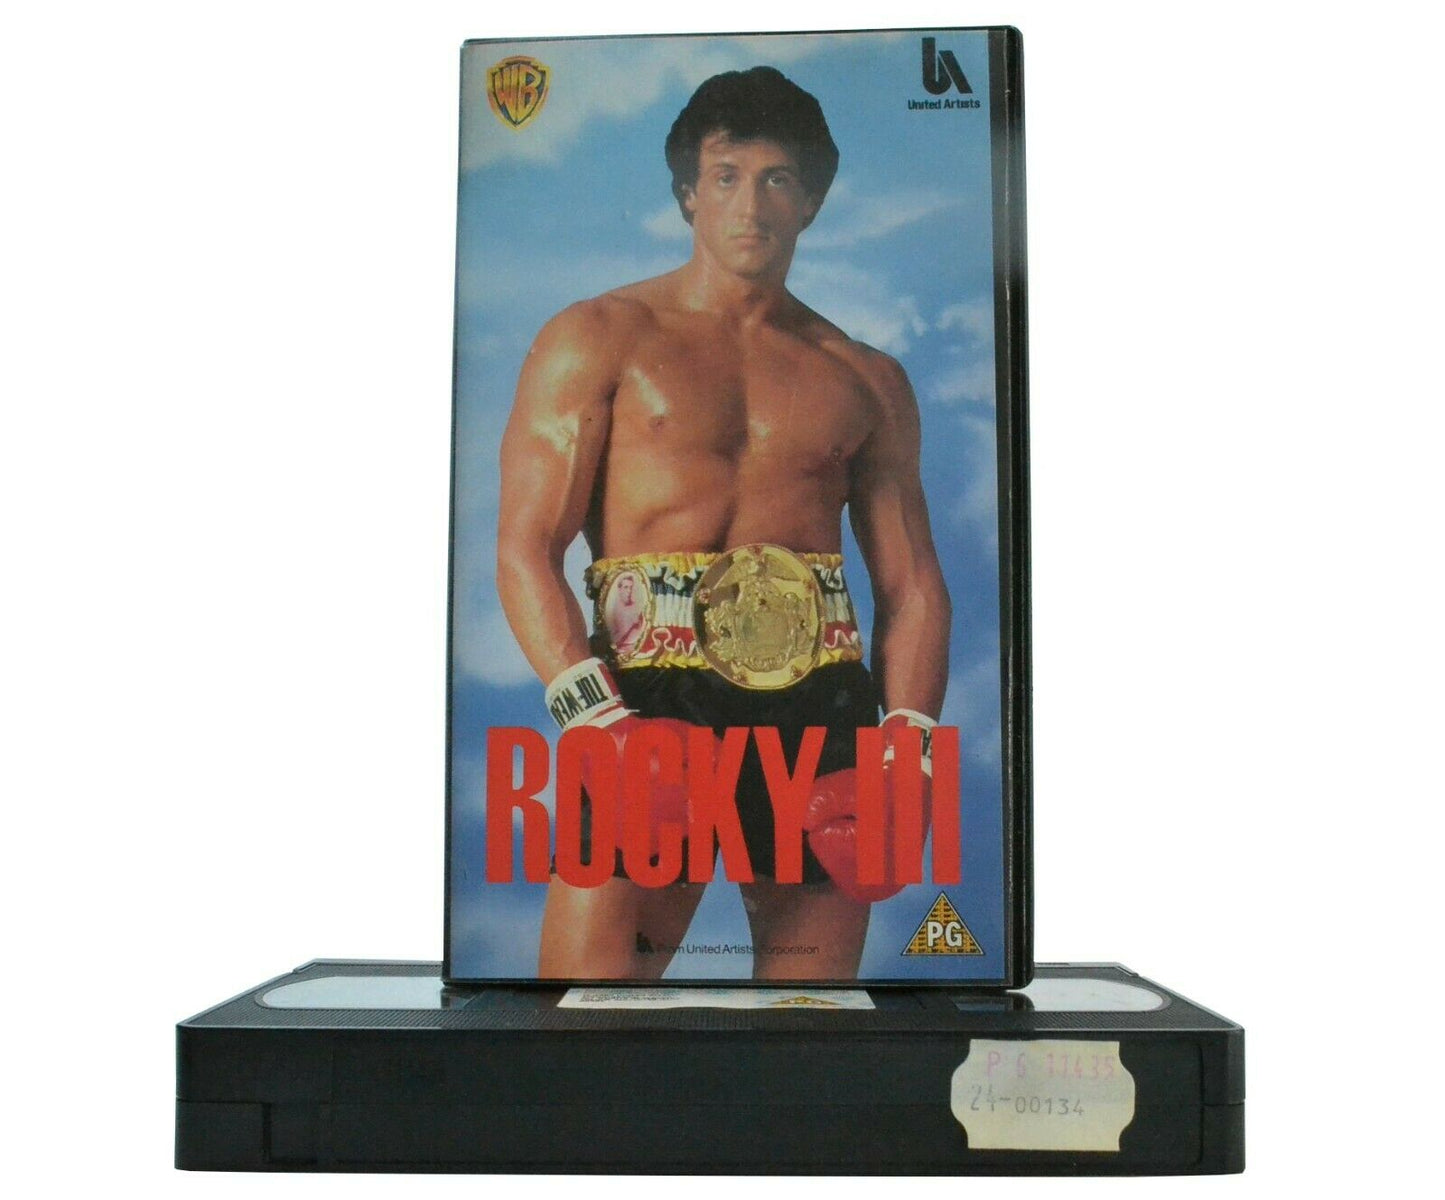 Rocky 3 (1982): Stallone Vs. Mr.T - (1989) Warner Release - Sports Drama - VHS-